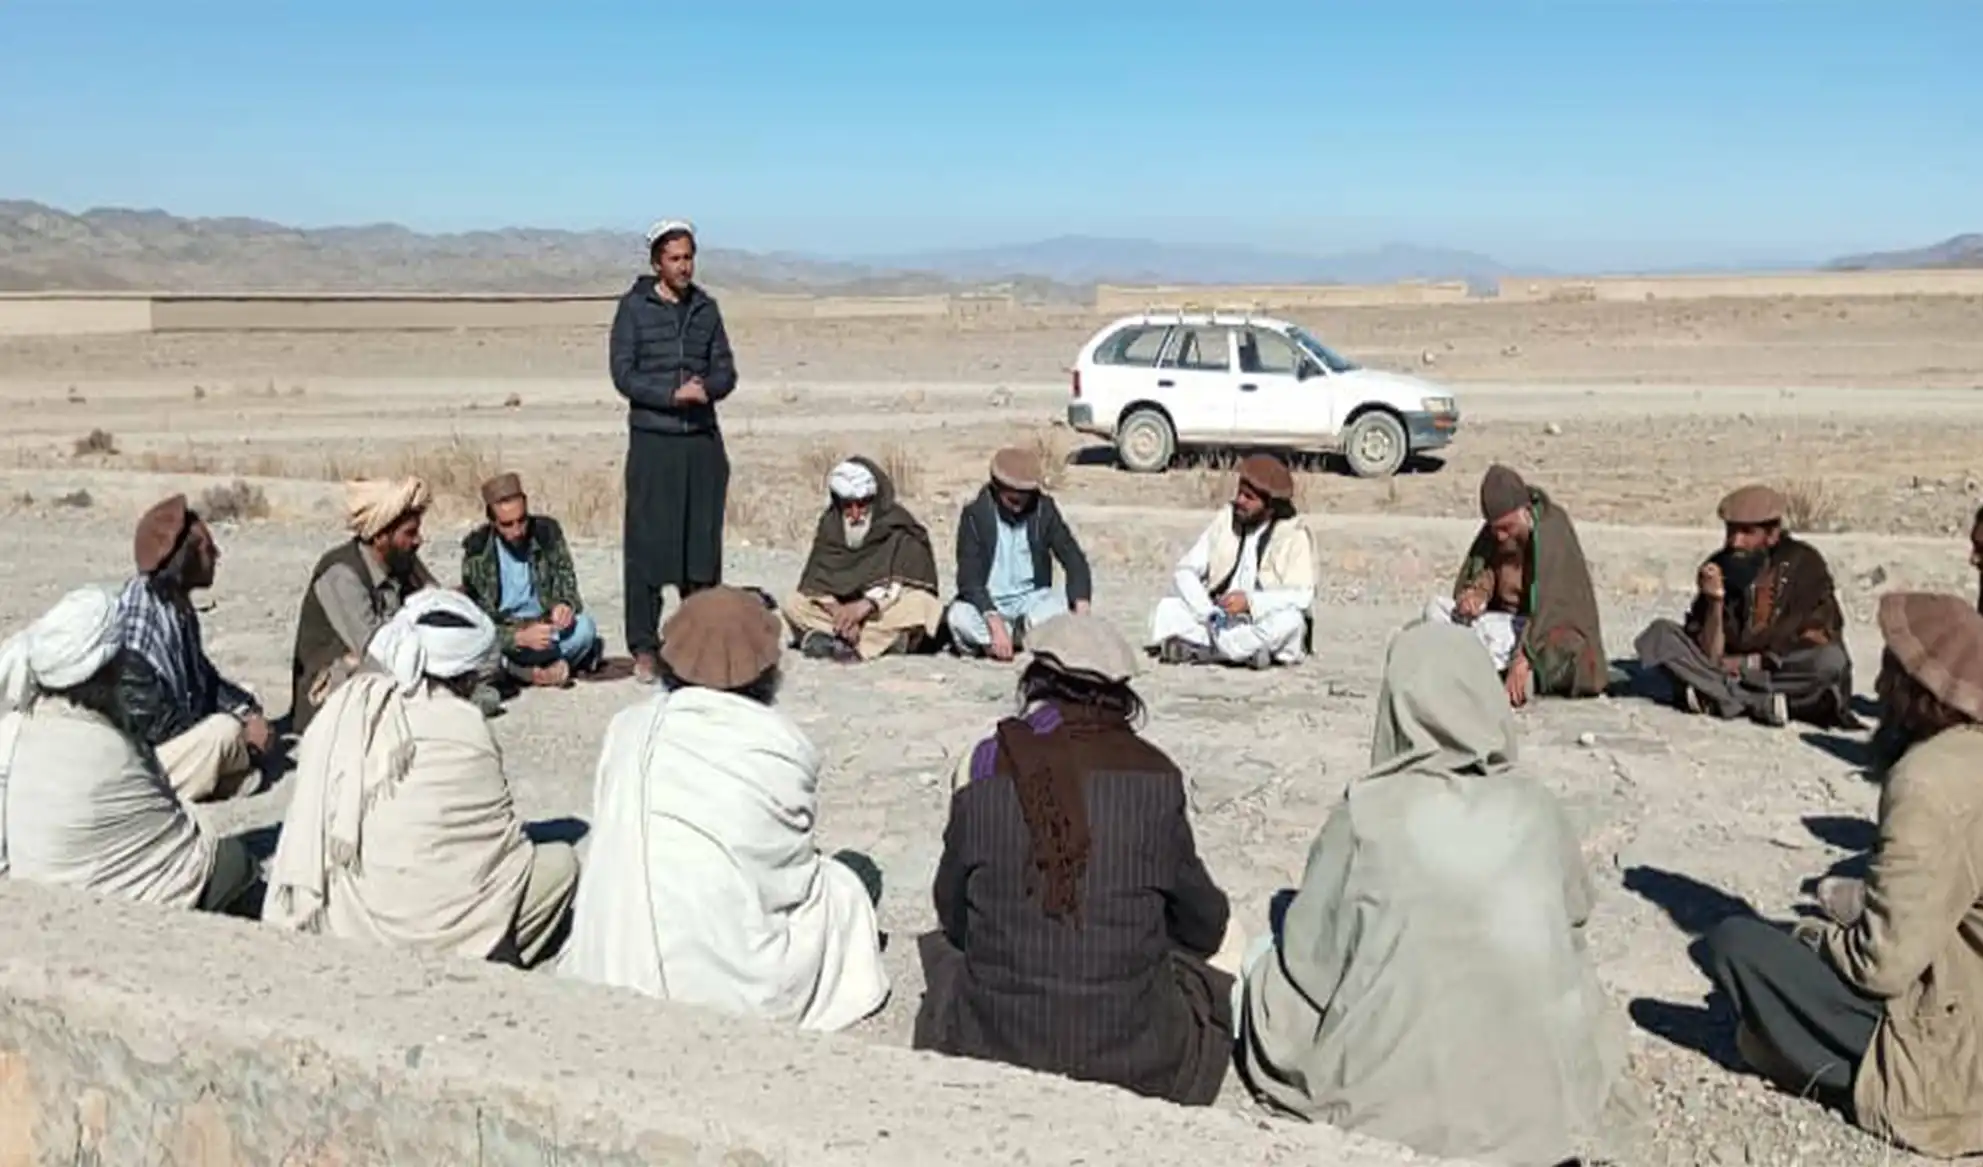 Paktika-based Waziristan refugees demand homes